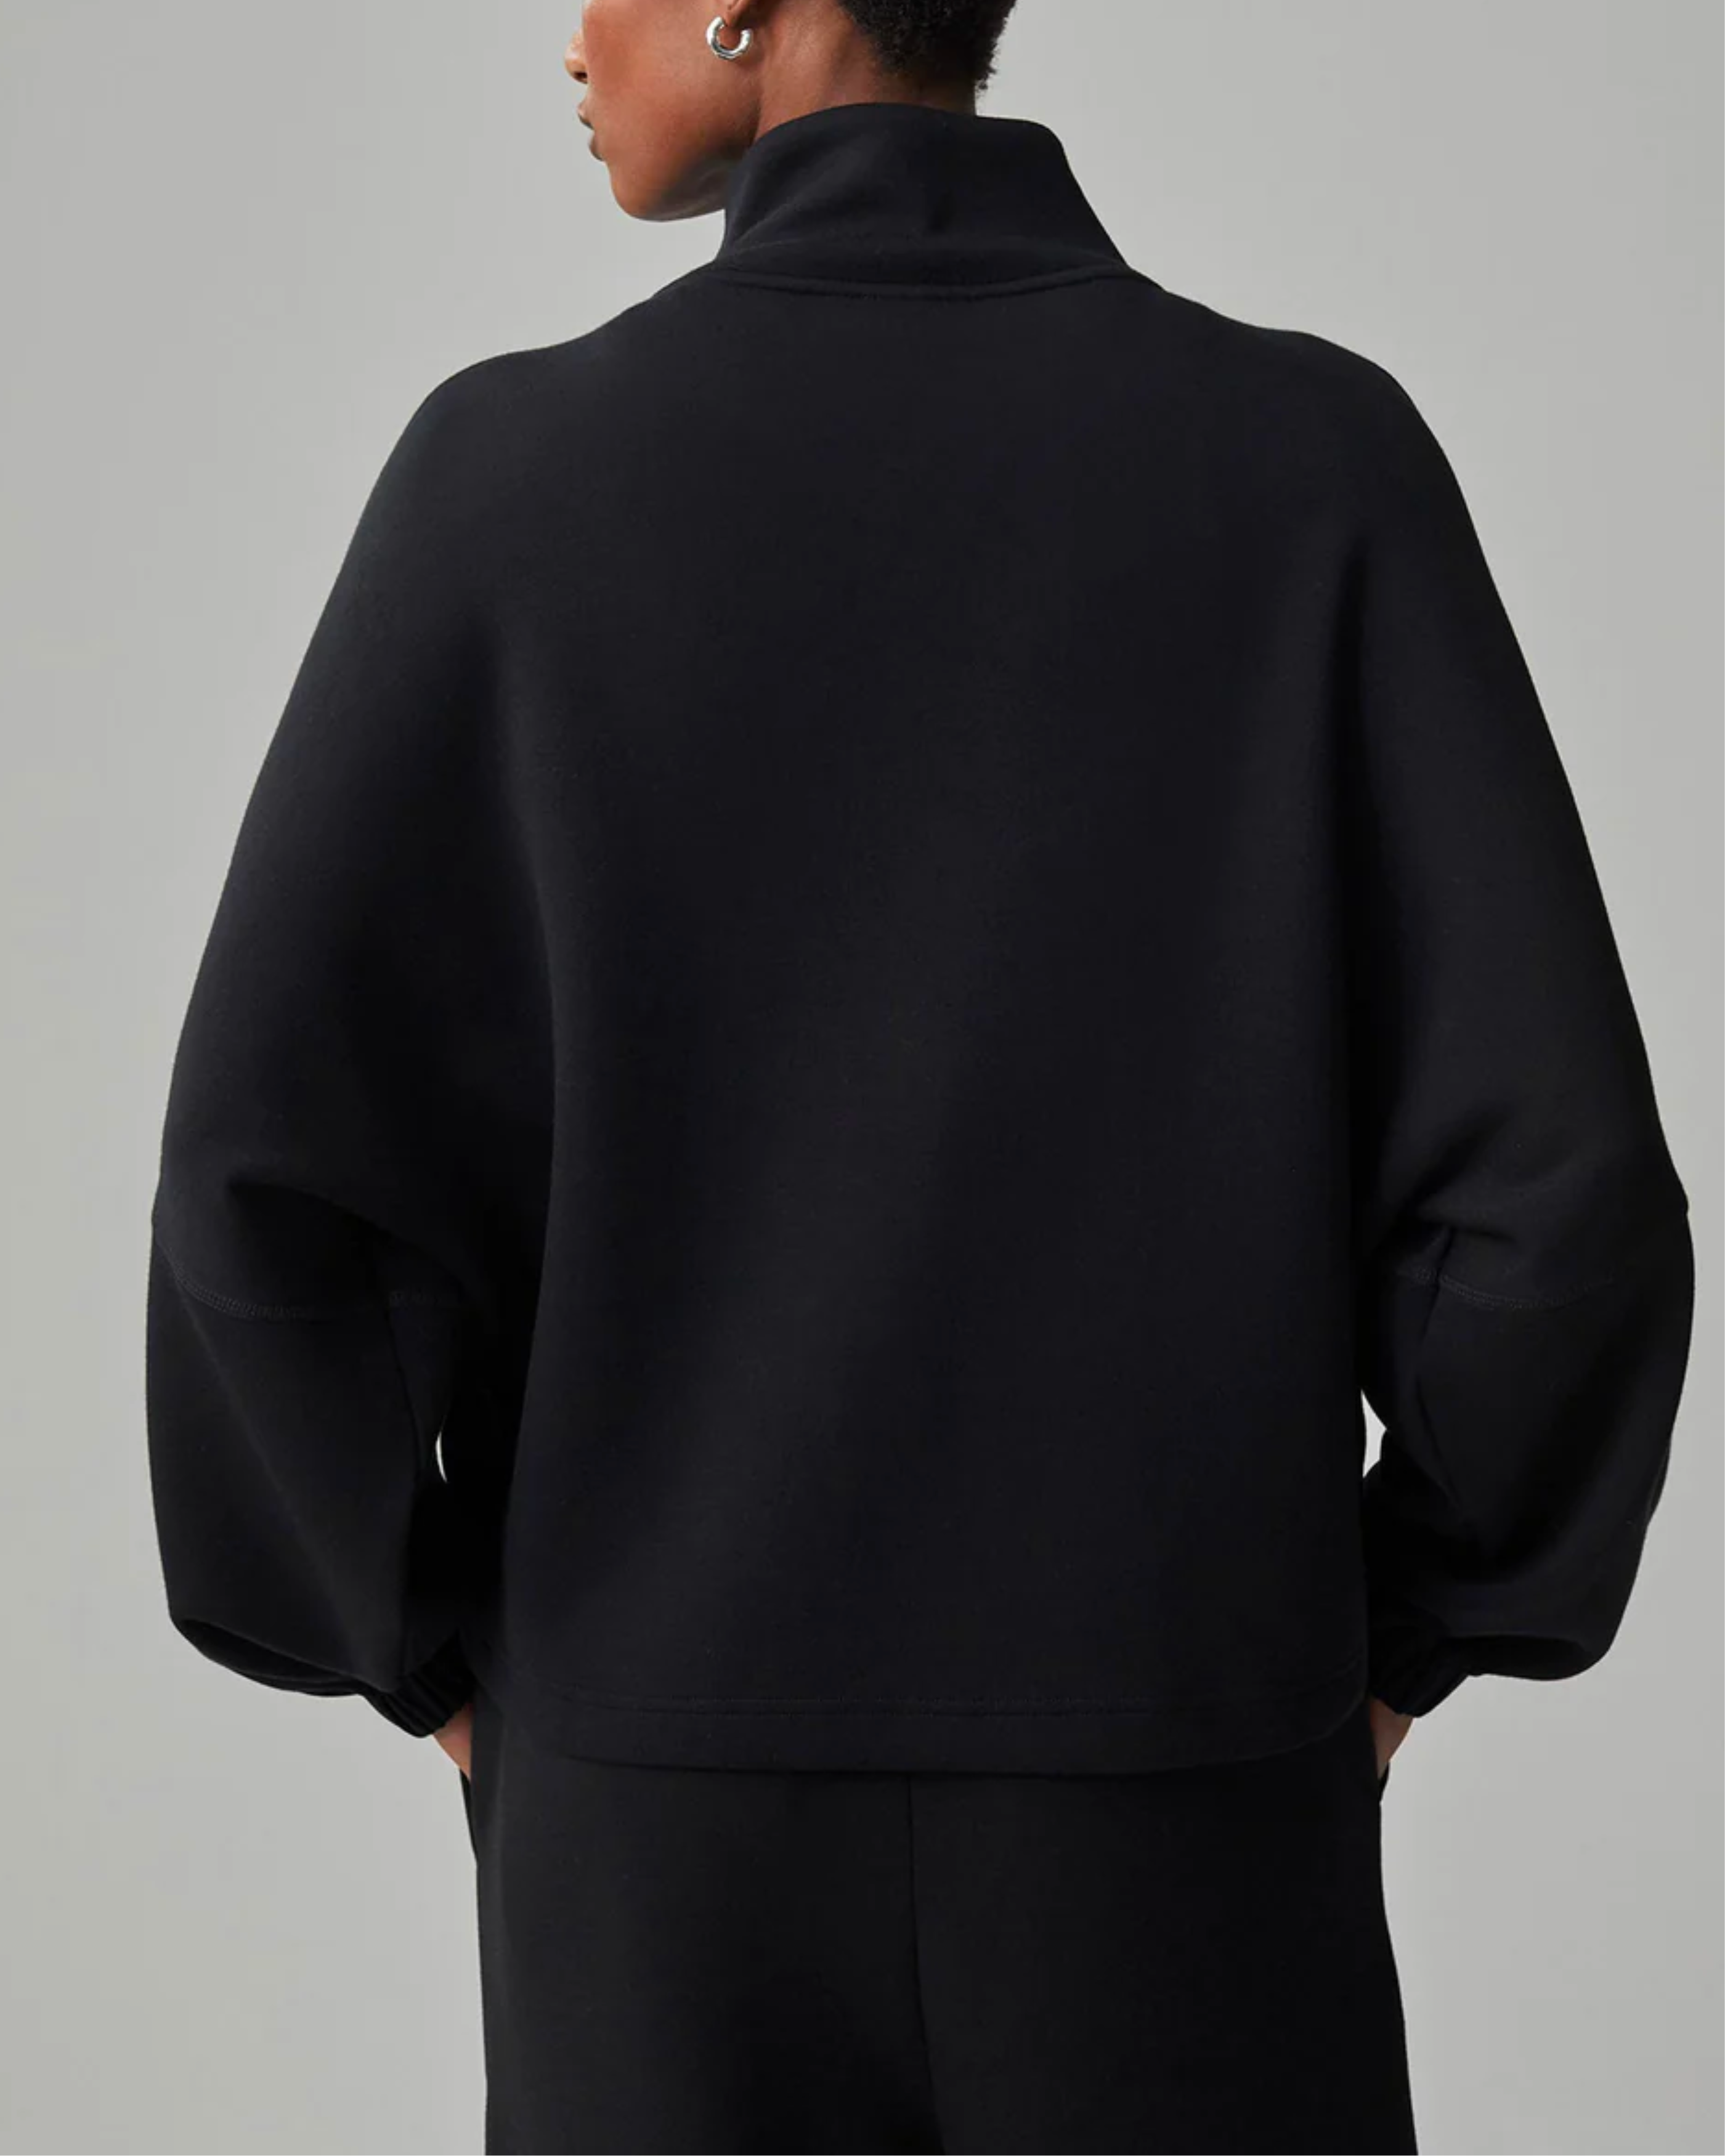 Varley Ashbury Zip Through Sweatshirt in Black